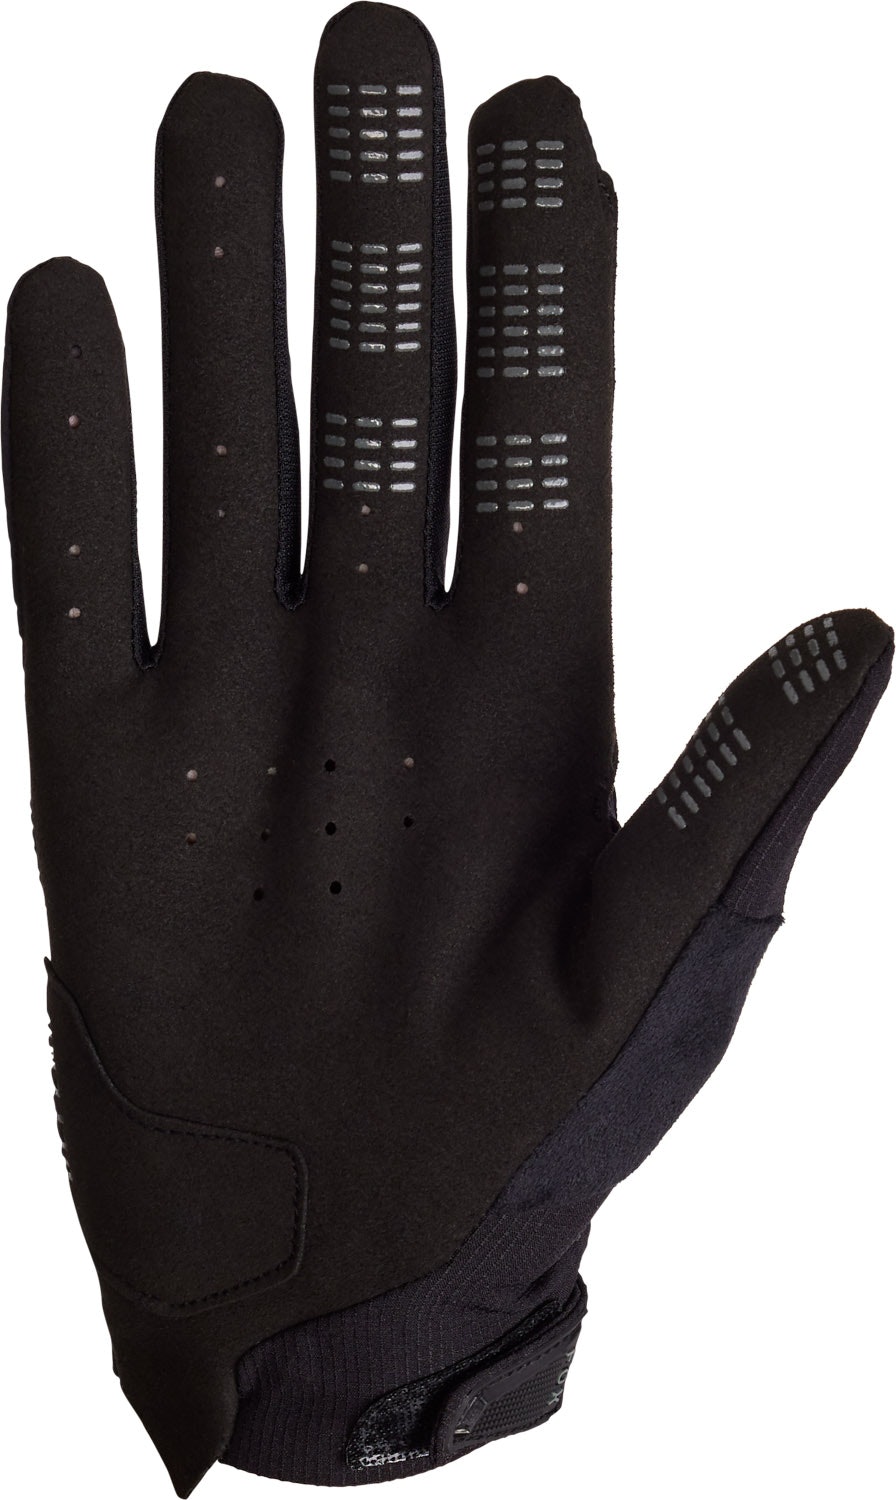 Fox Defend D30 Glove